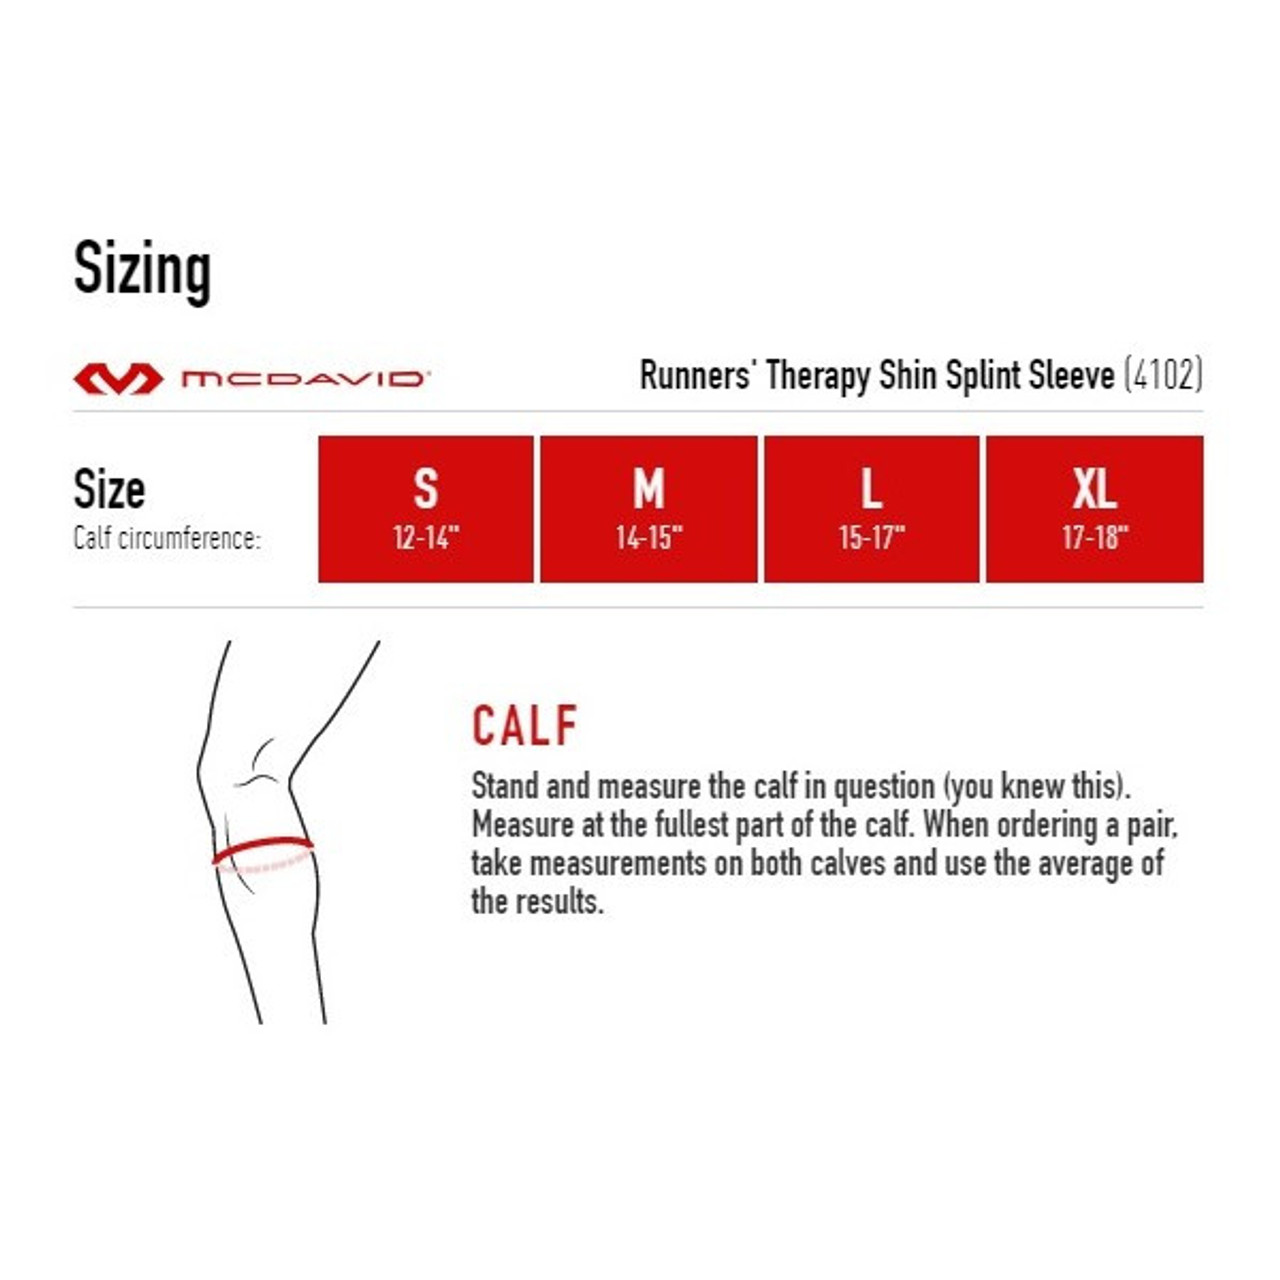 McDavid Runners Therapy Shin Splint Sleeve DME-Direct